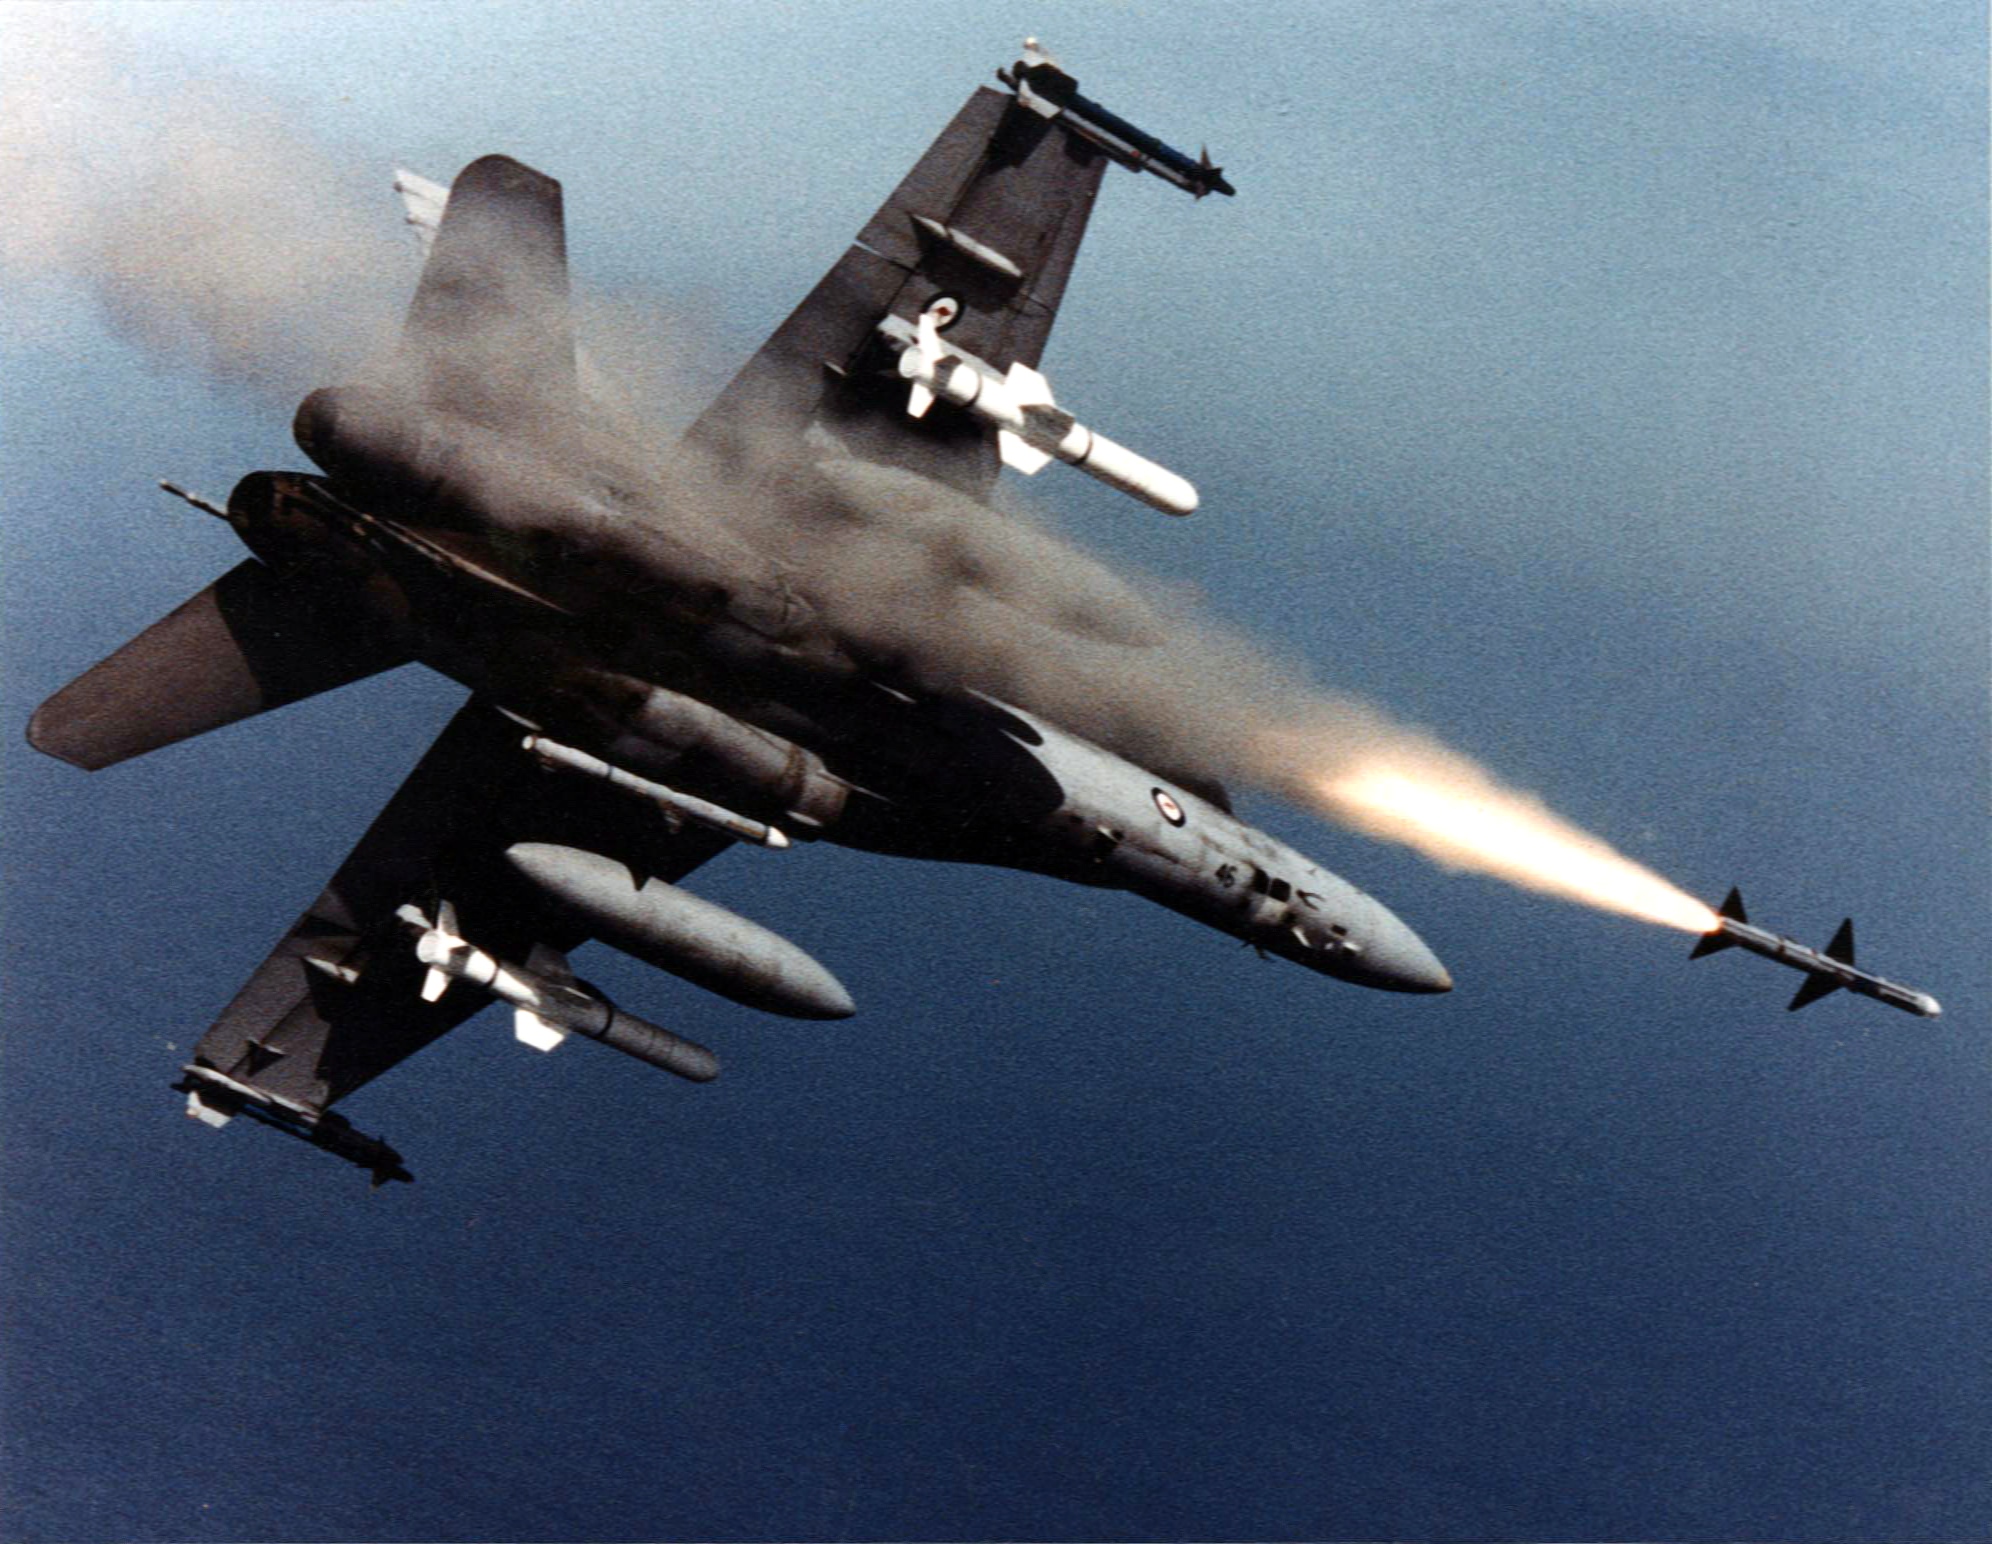 Australian_F-18A_Hornet_launches_Sparrow_missile_c1990.jpg